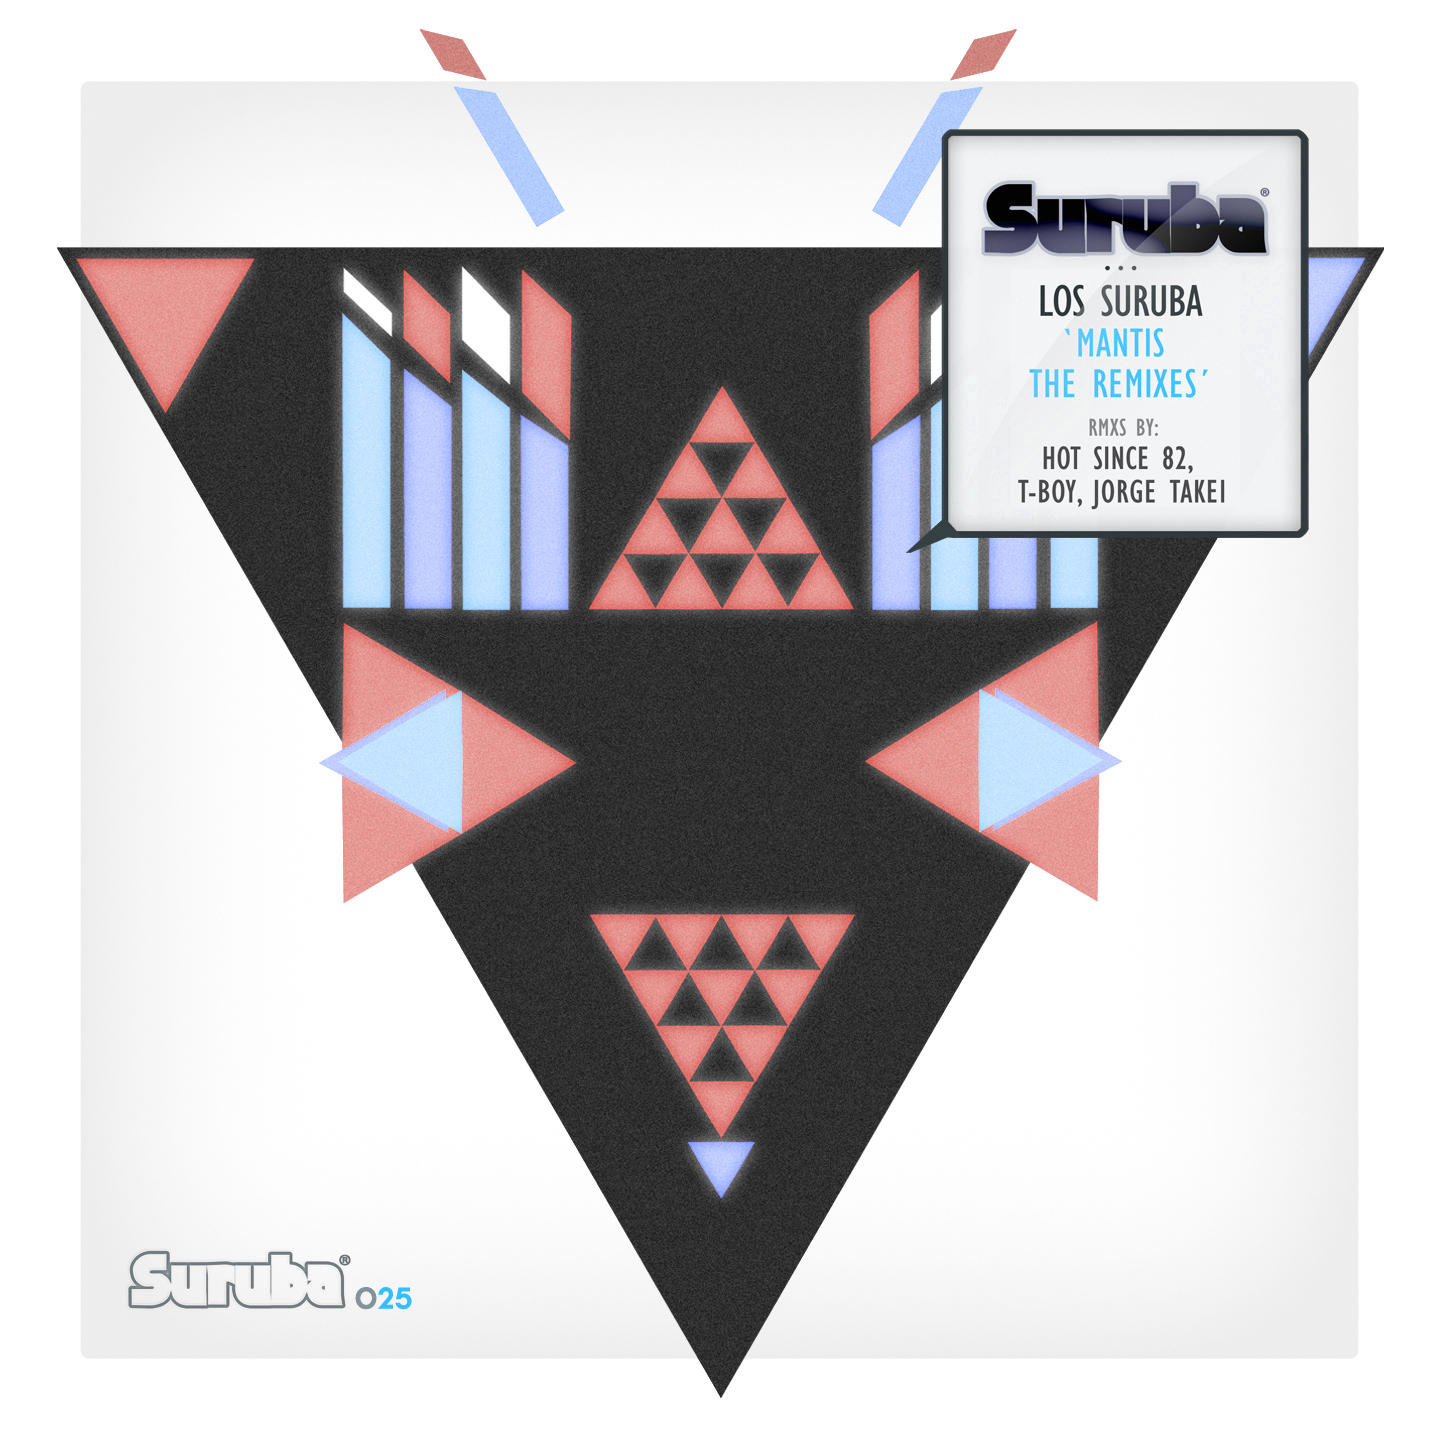 image cover: Los Suruba - Mantis The Remixes (SURUBA025)